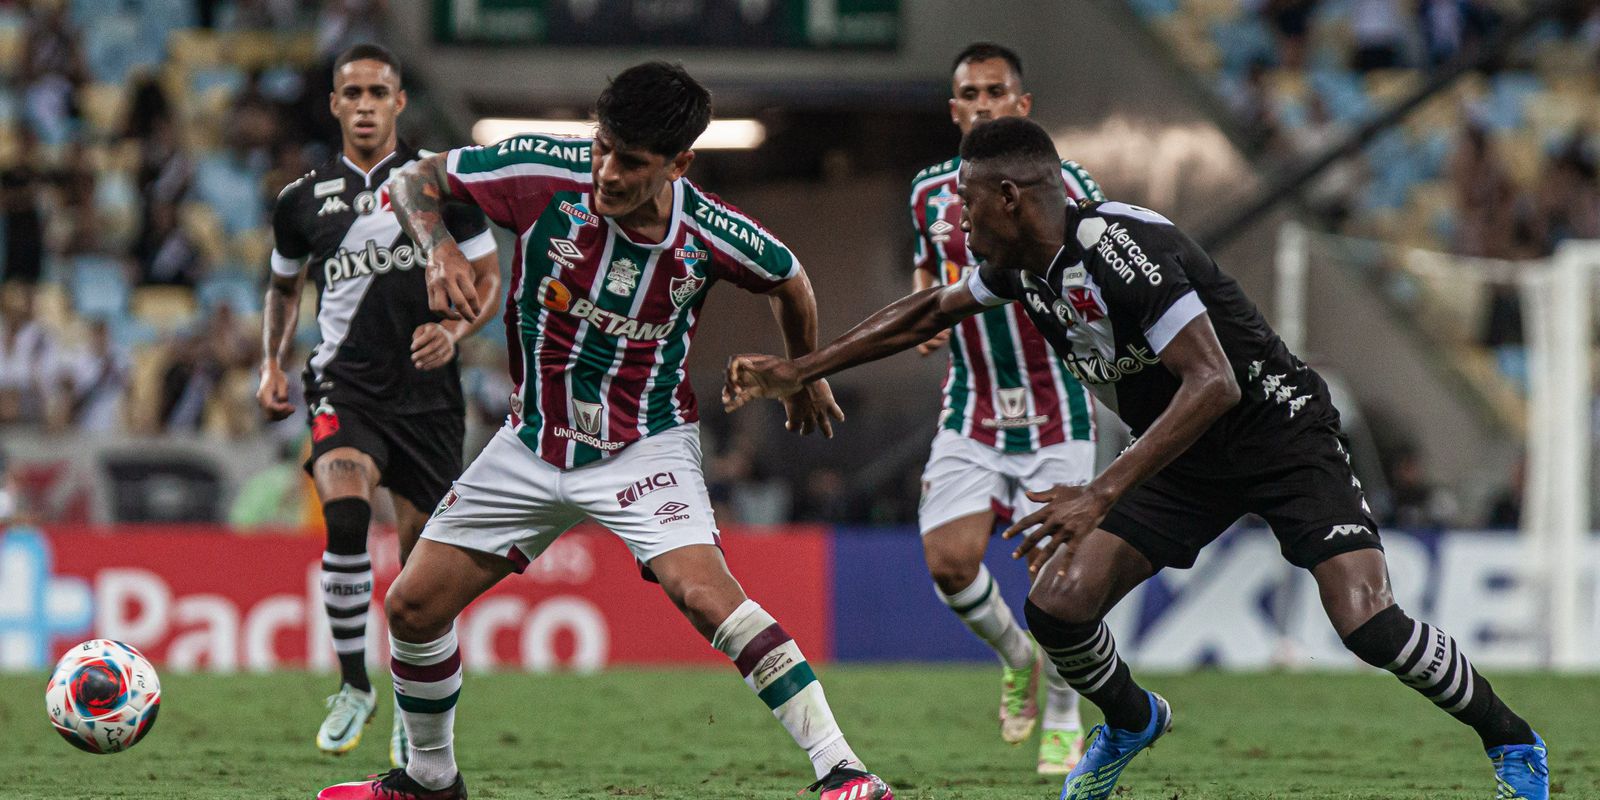 Embalado após golear River, Fluminense pega o Vasco no Maracanã